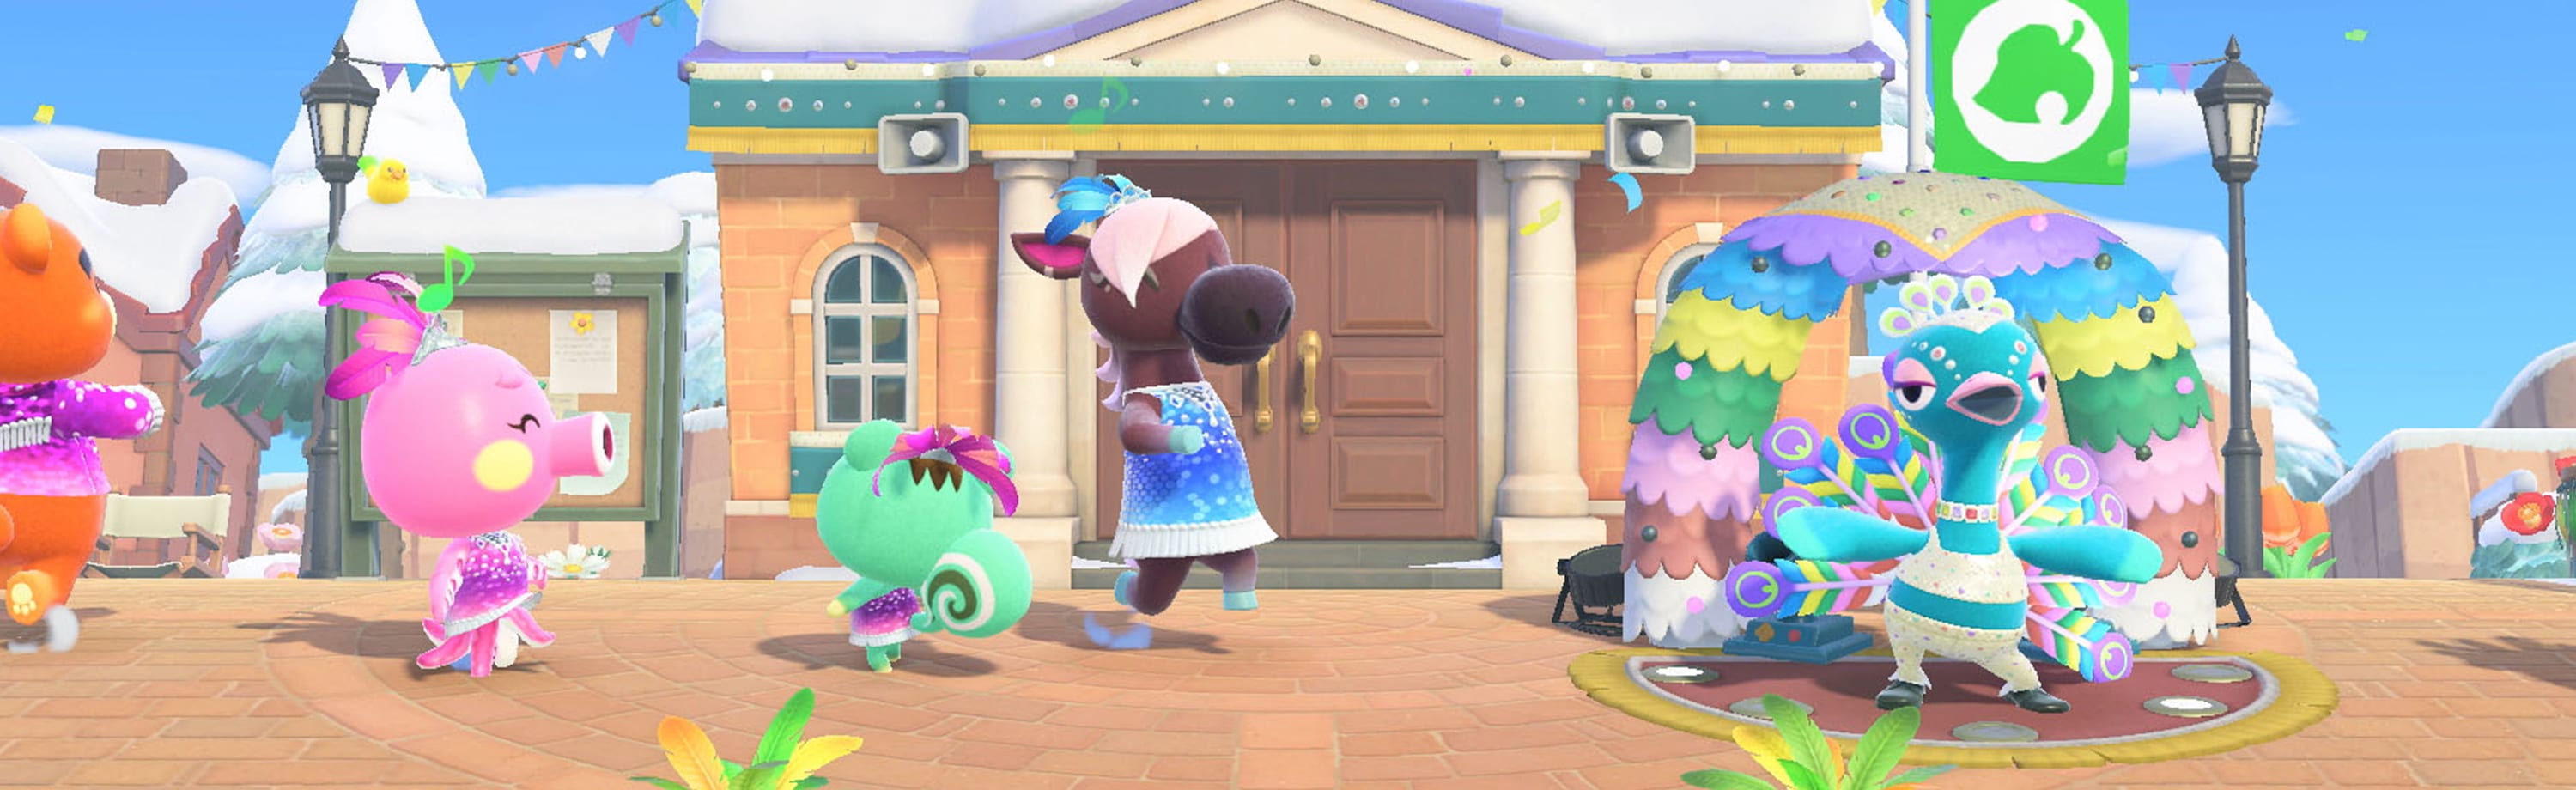 Festivale Update in Animal Crossing